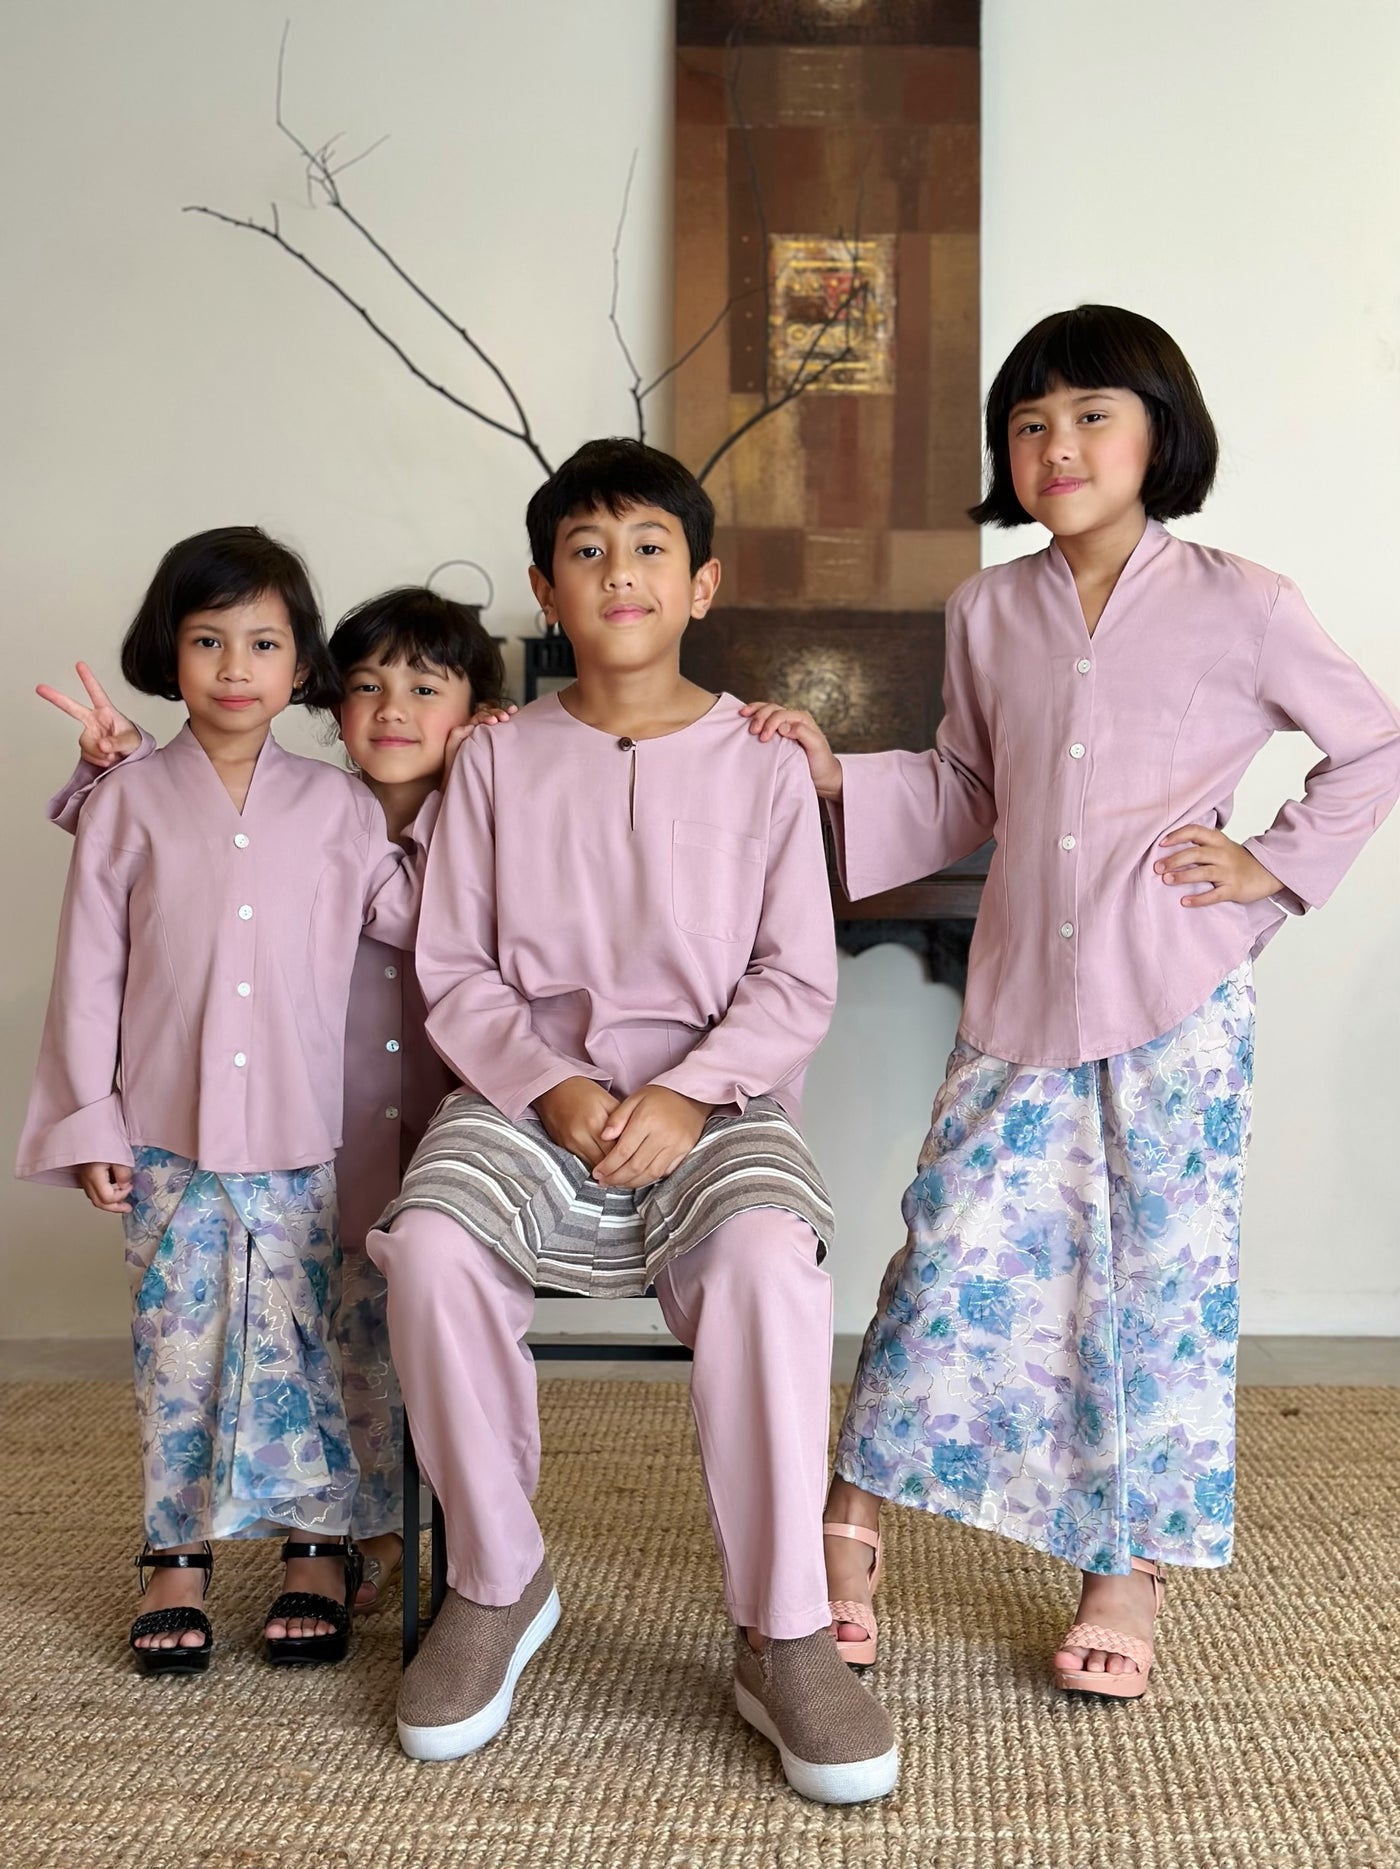 NUH Teluk Belanga Baju Melayu Set in Dusty Lilac